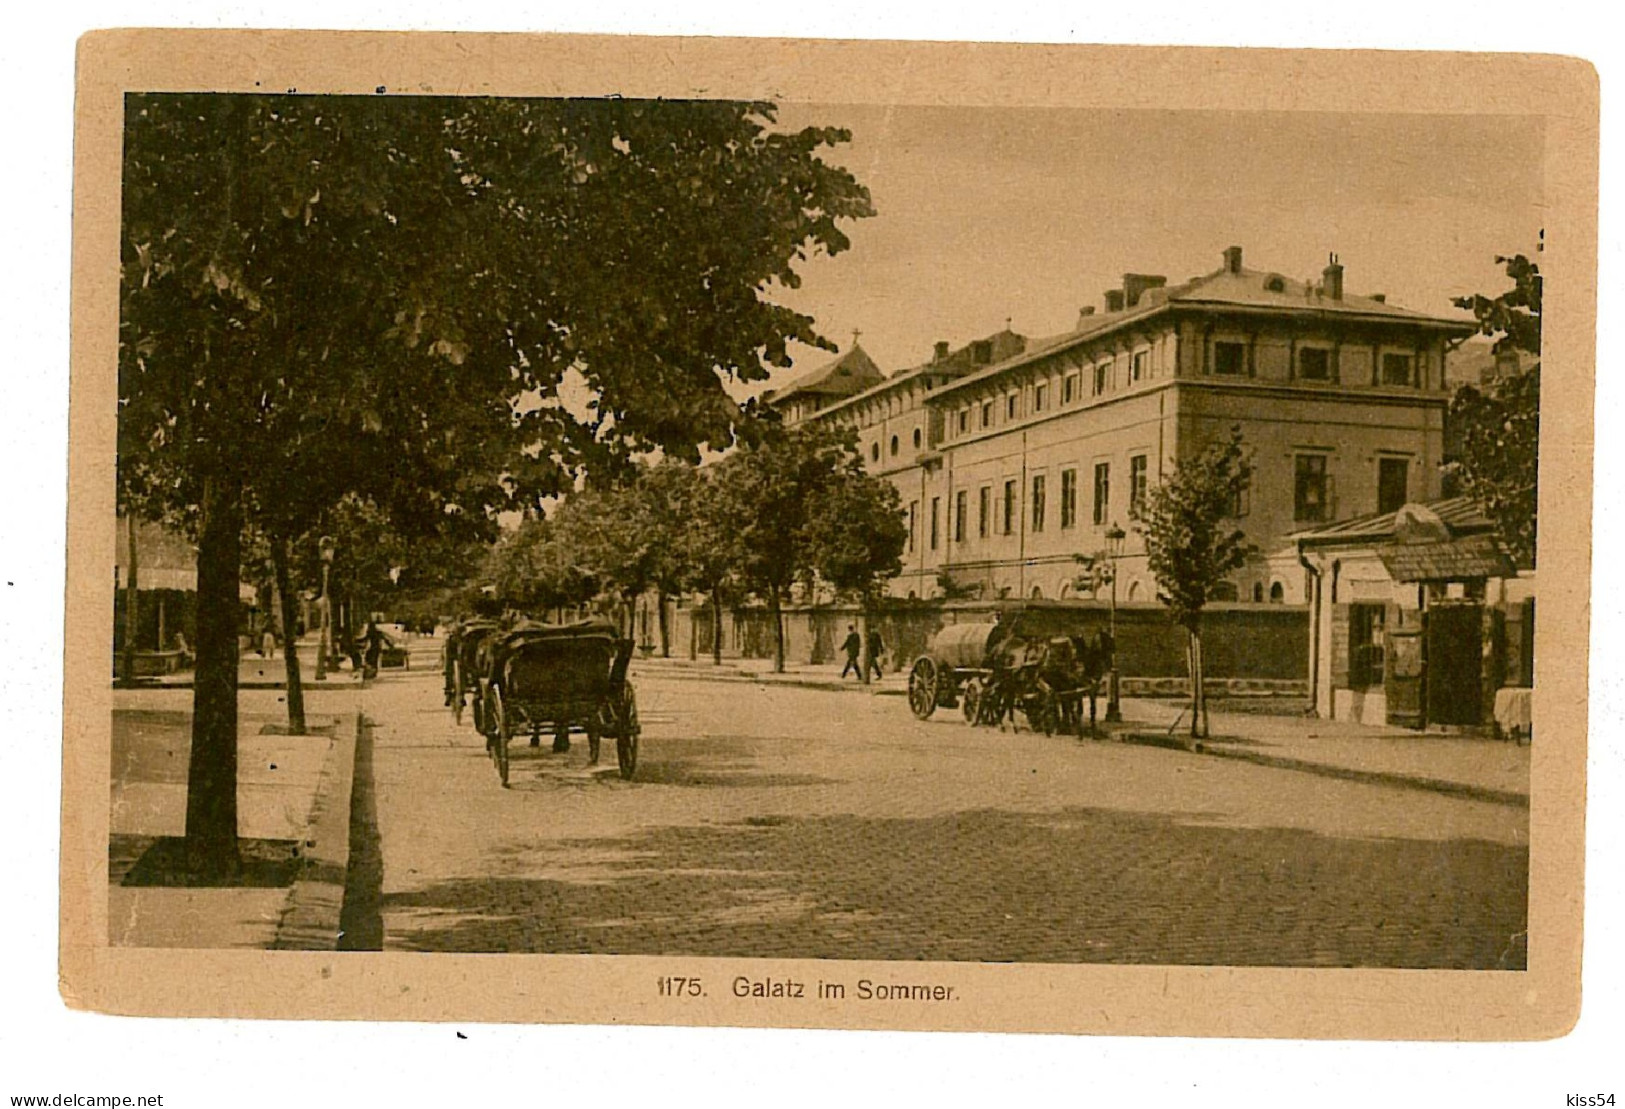 RO 40 - 1271 GALATI, Centrul, Caruta Si Trasuri, Romania - Old Postcard, CENSOR - Used - 1918 - Rumänien